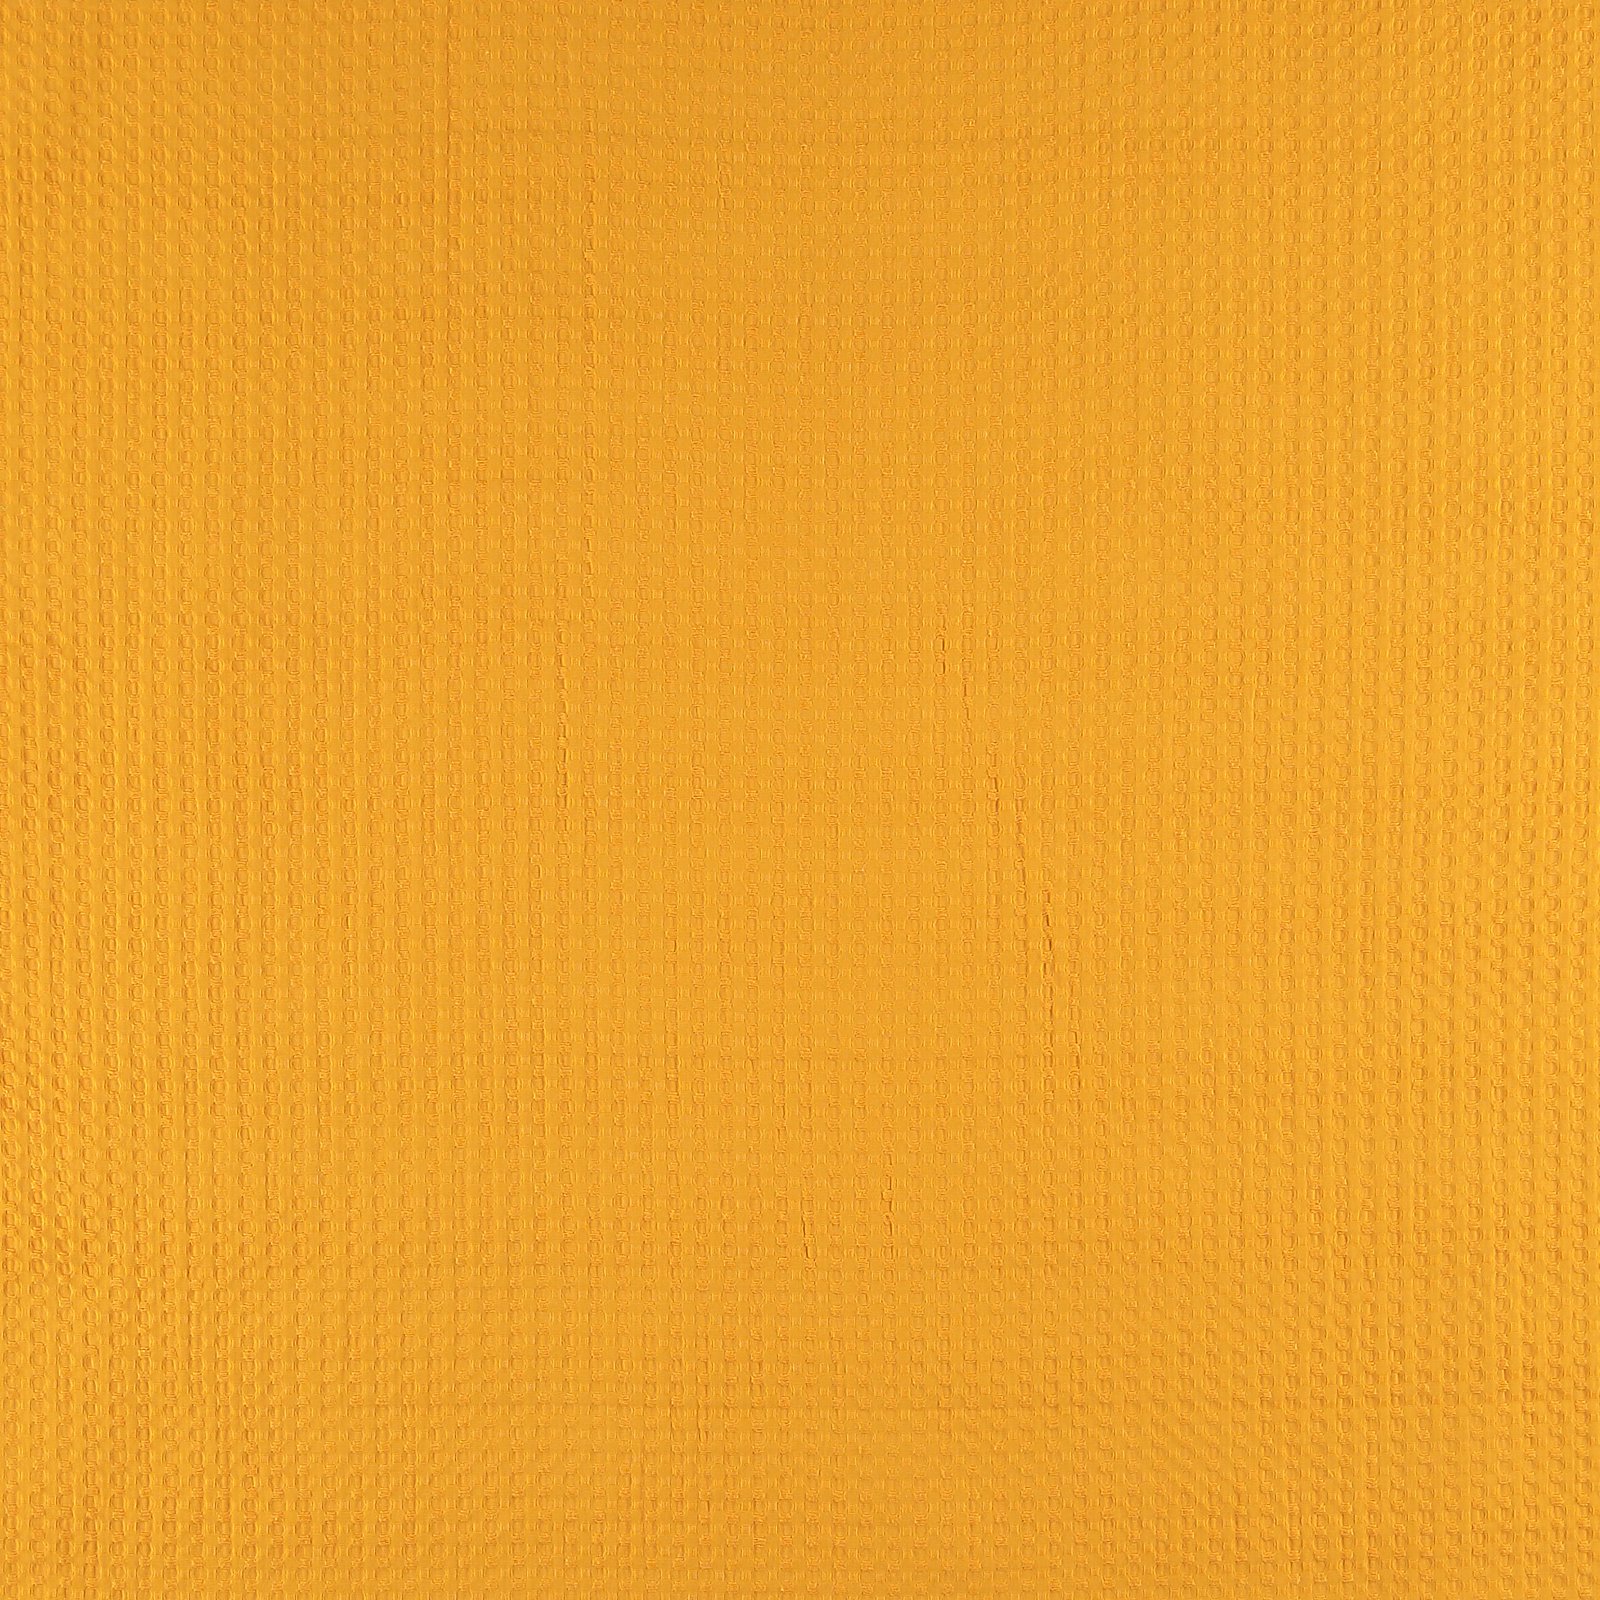 Vevet jacquard oransje gul med struktur 501919_pack_solid